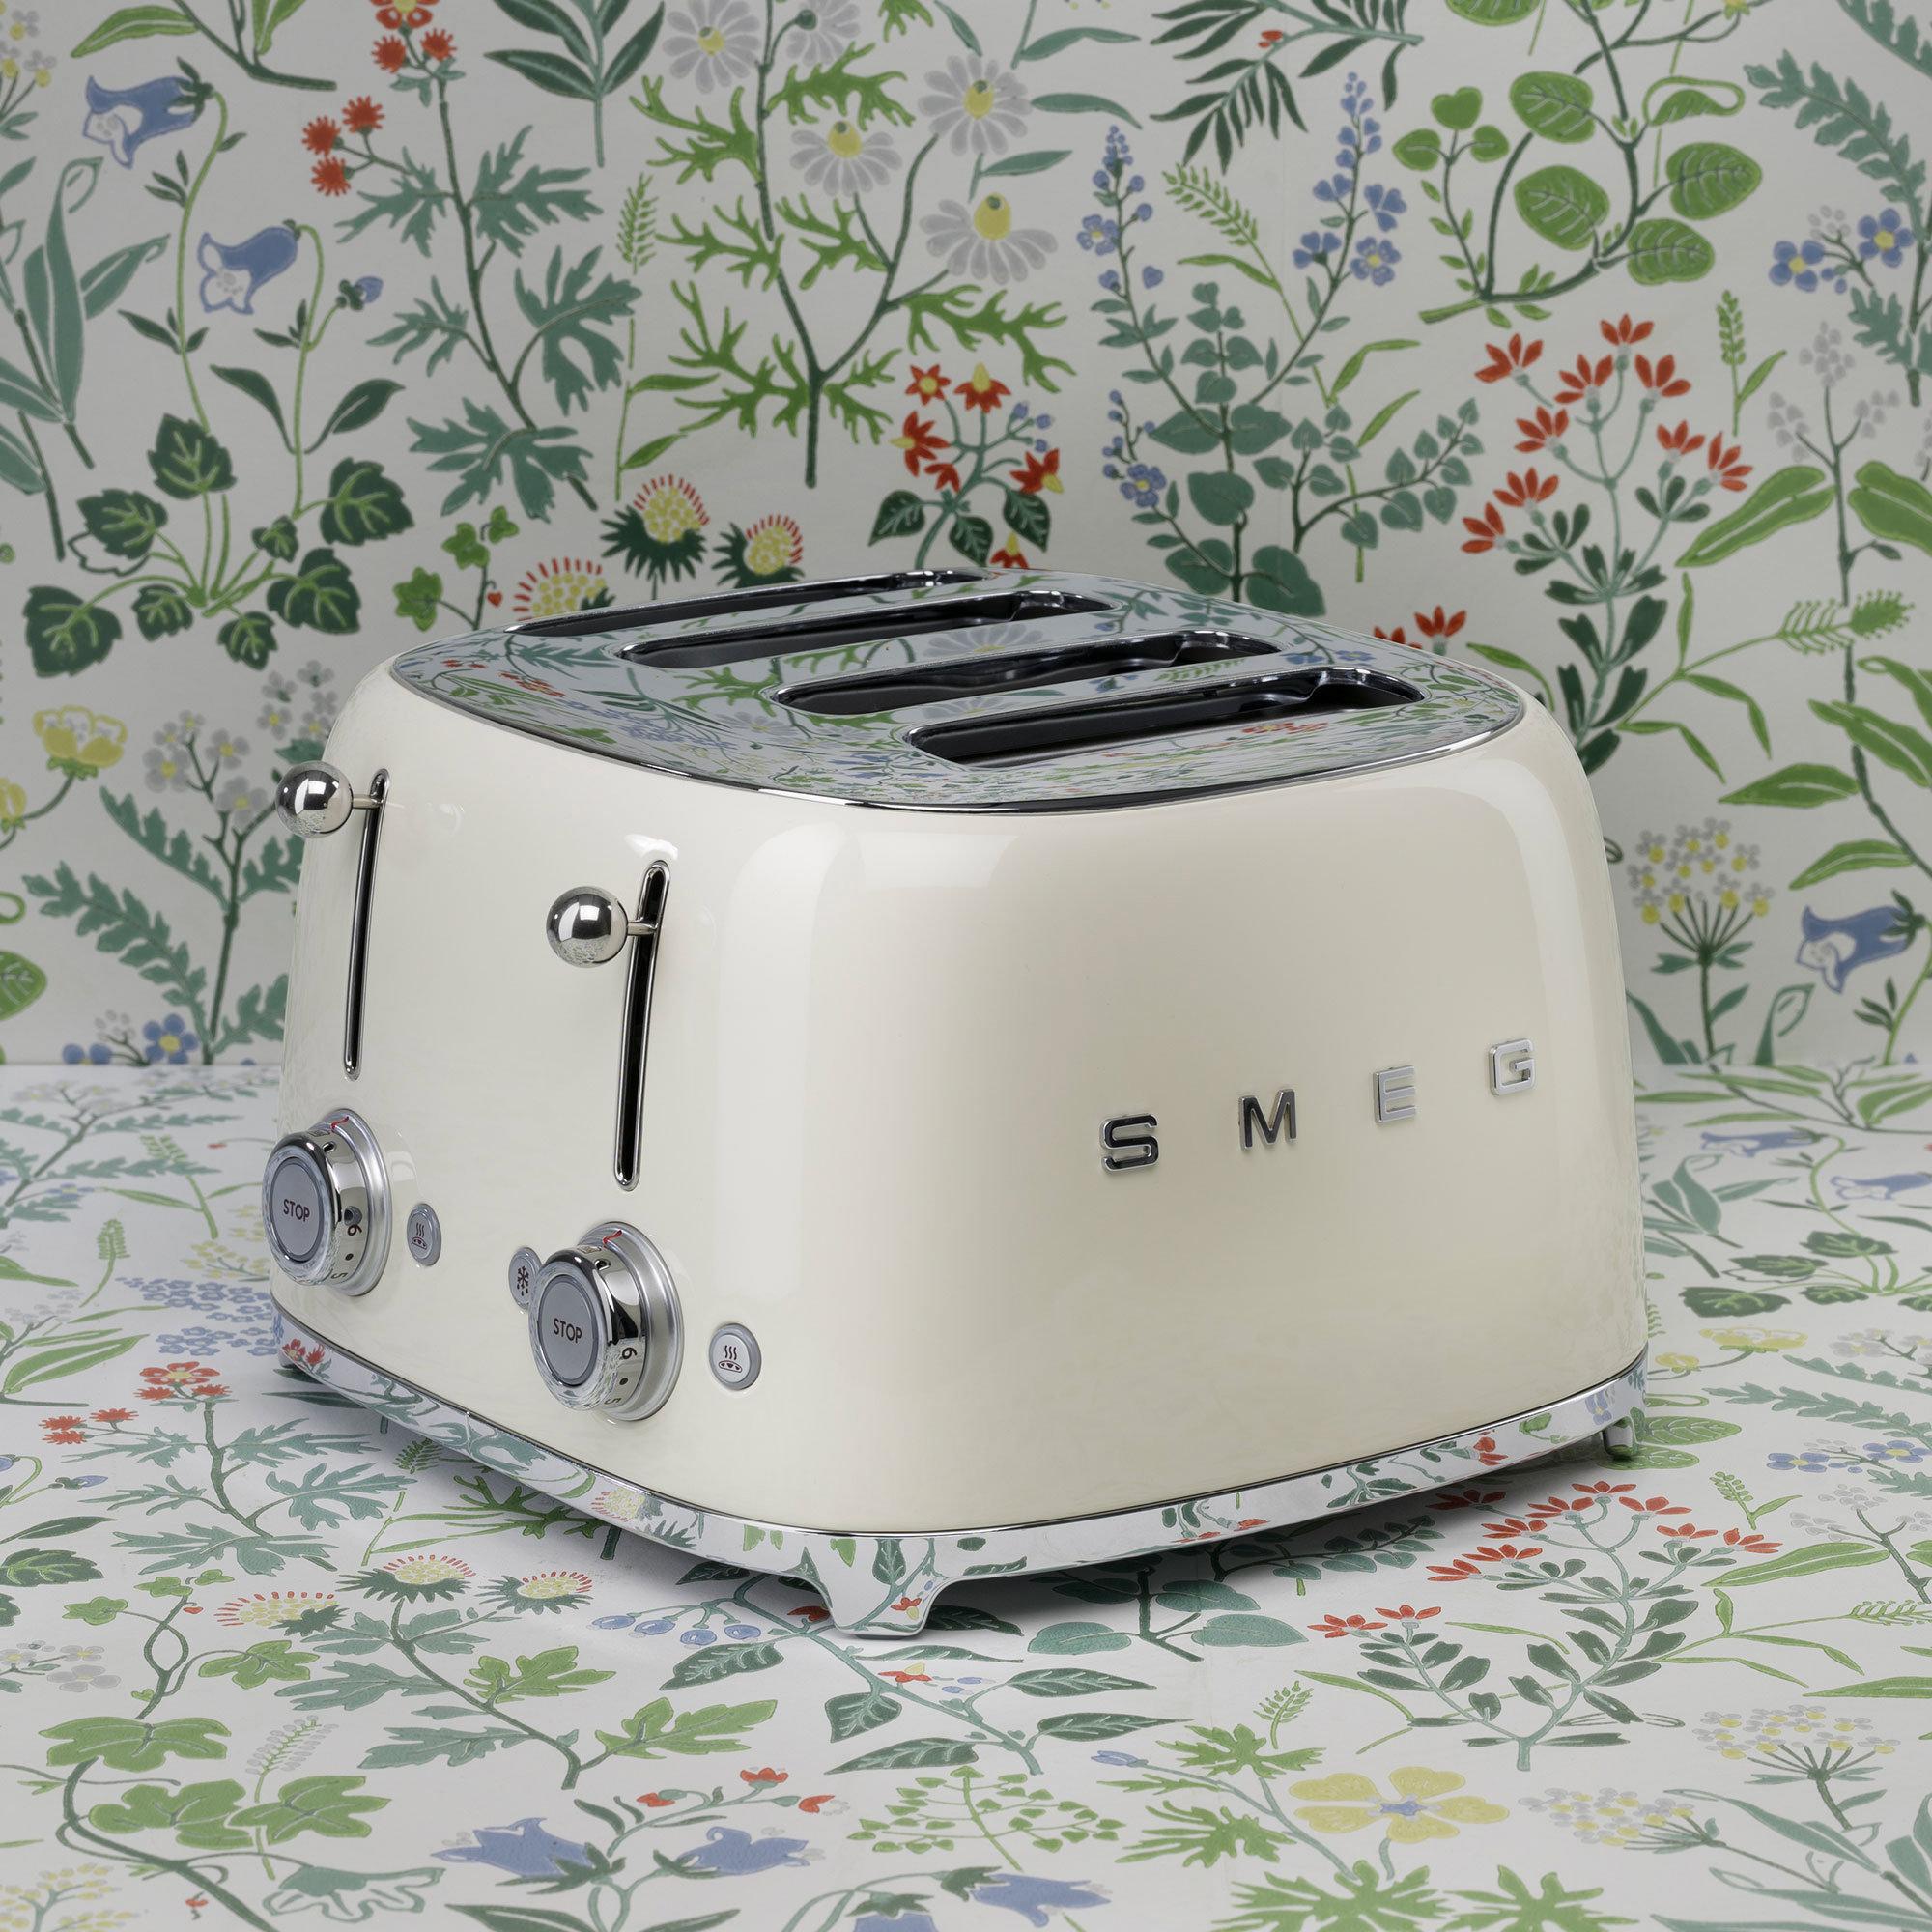 Smeg 50's Retro Style 4 Slot Toaster Cream Image 4